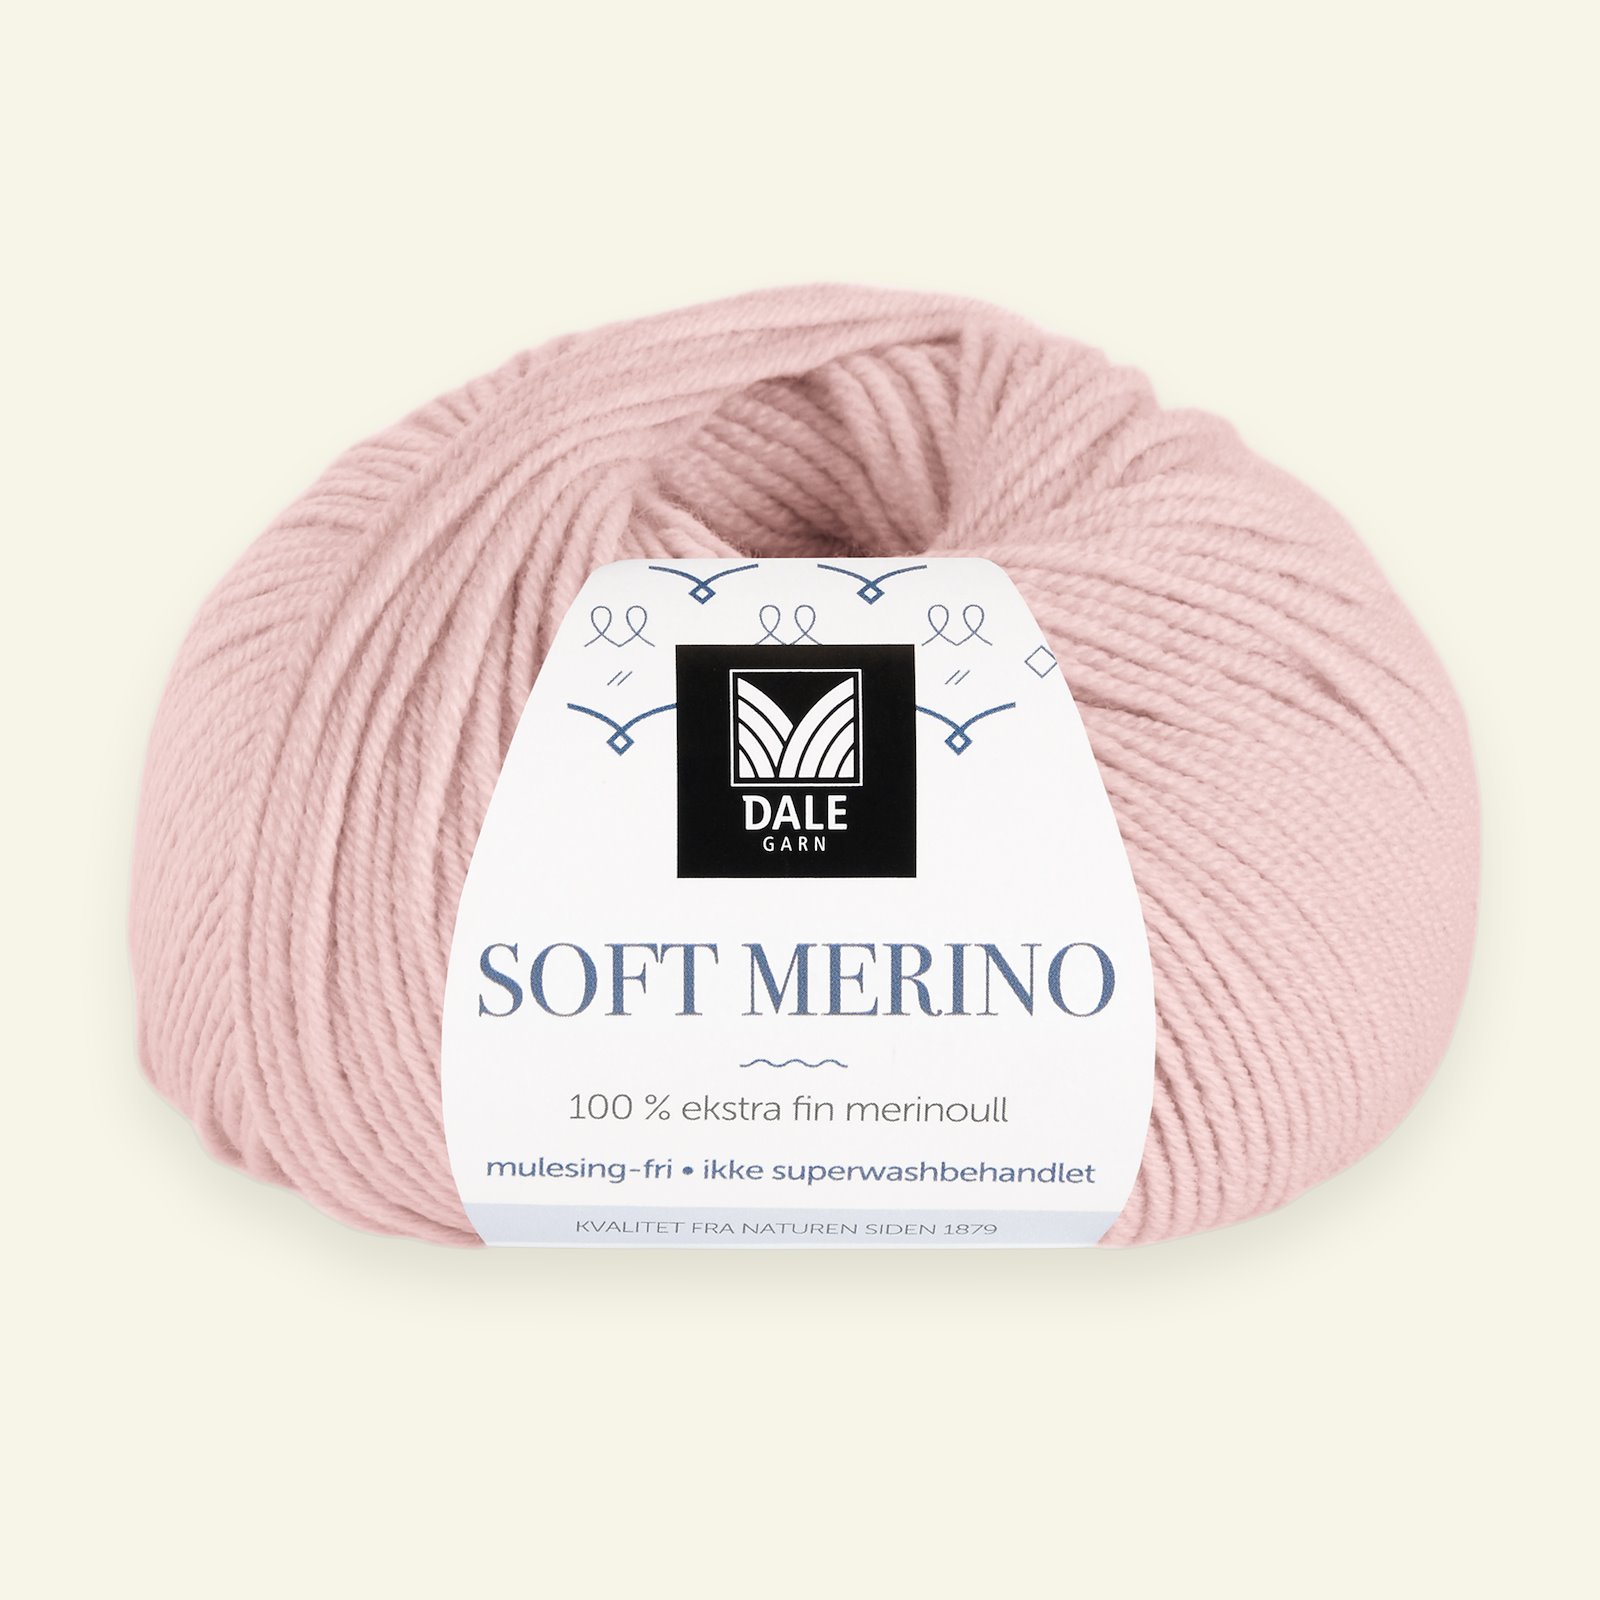 Dale Garn, 100% ekstra fint merinogarn "Soft Merino", Rosa (3018) 90000339_pack